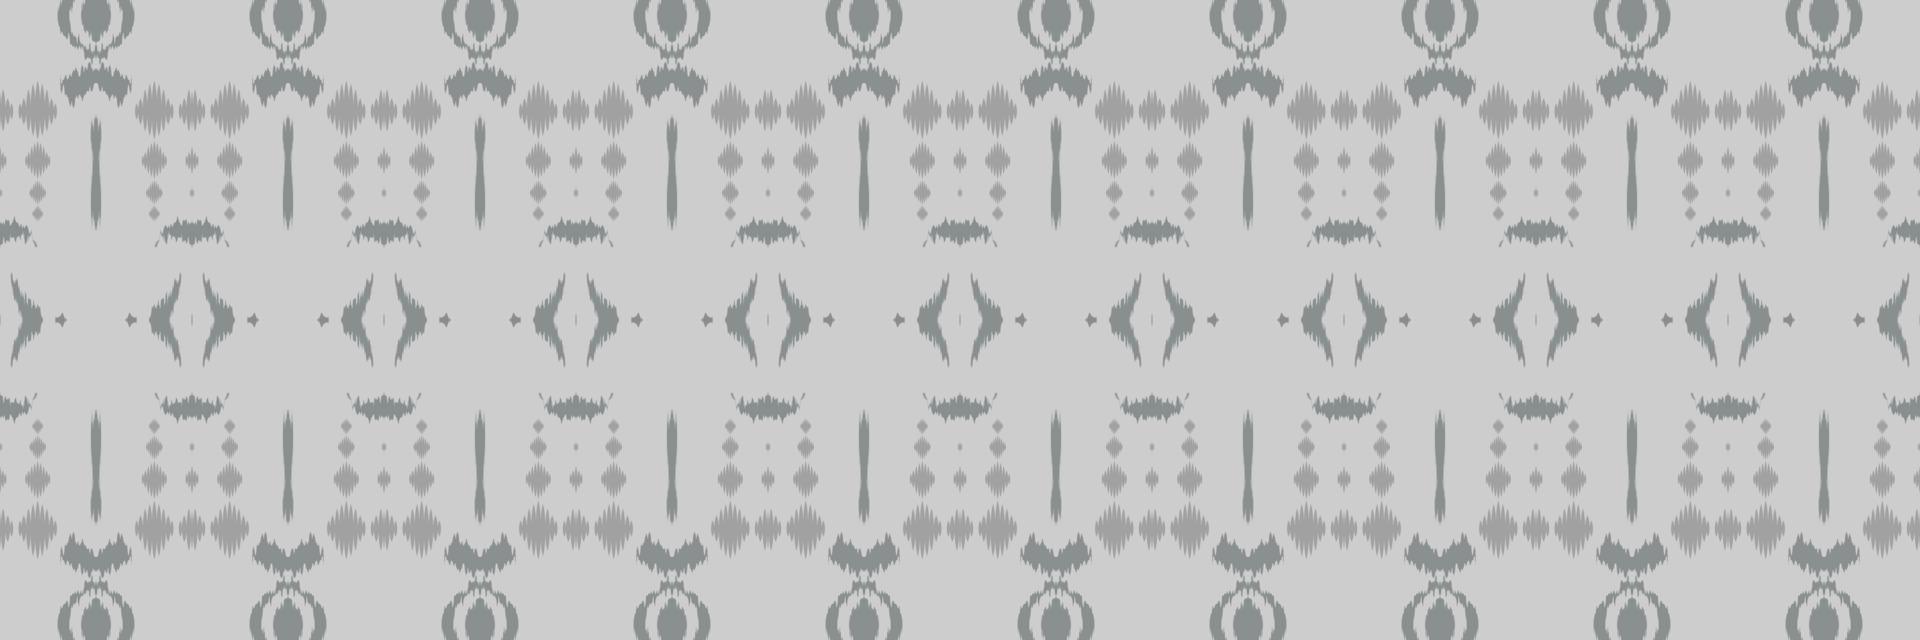 ikat senza soluzione di continuità tribale sfondi senza soluzione di continuità modello. etnico geometrico batik ikkat digitale vettore tessile design per stampe tessuto saree Mughal spazzola simbolo andane struttura Kurti kurtis kurtas